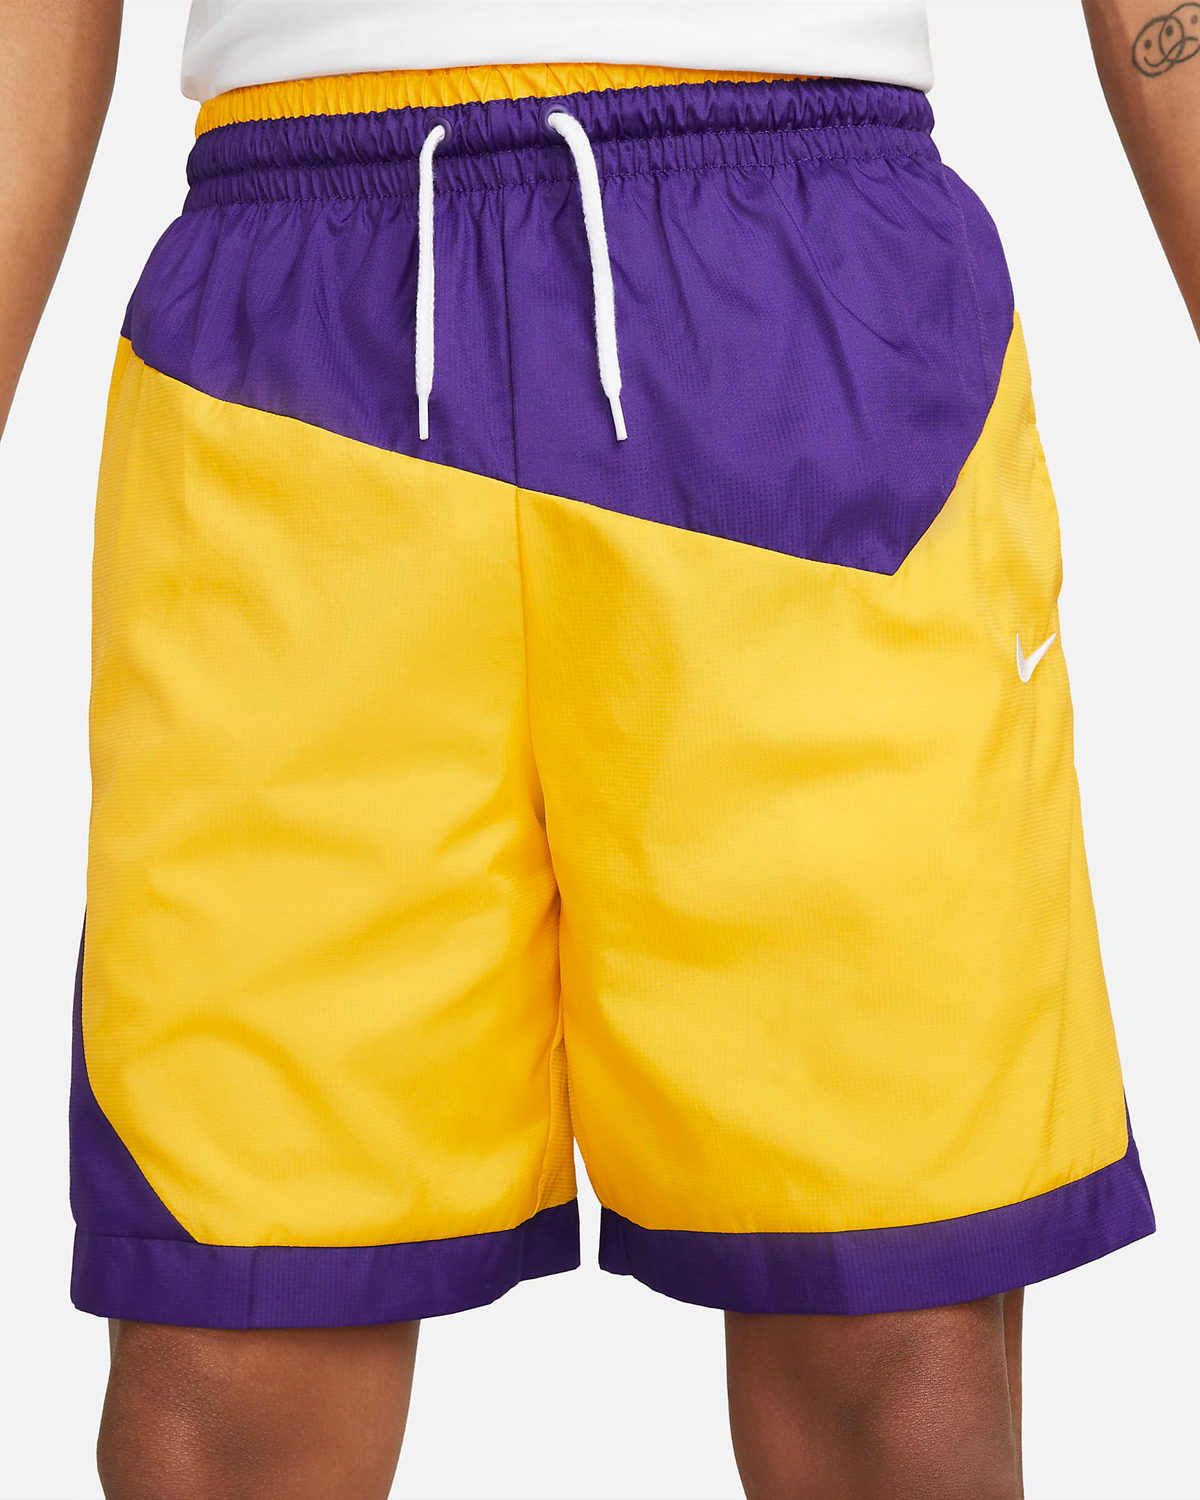 Nike-DNA-Woven-Basketball-Shorts-Court-Purple-University-Gold